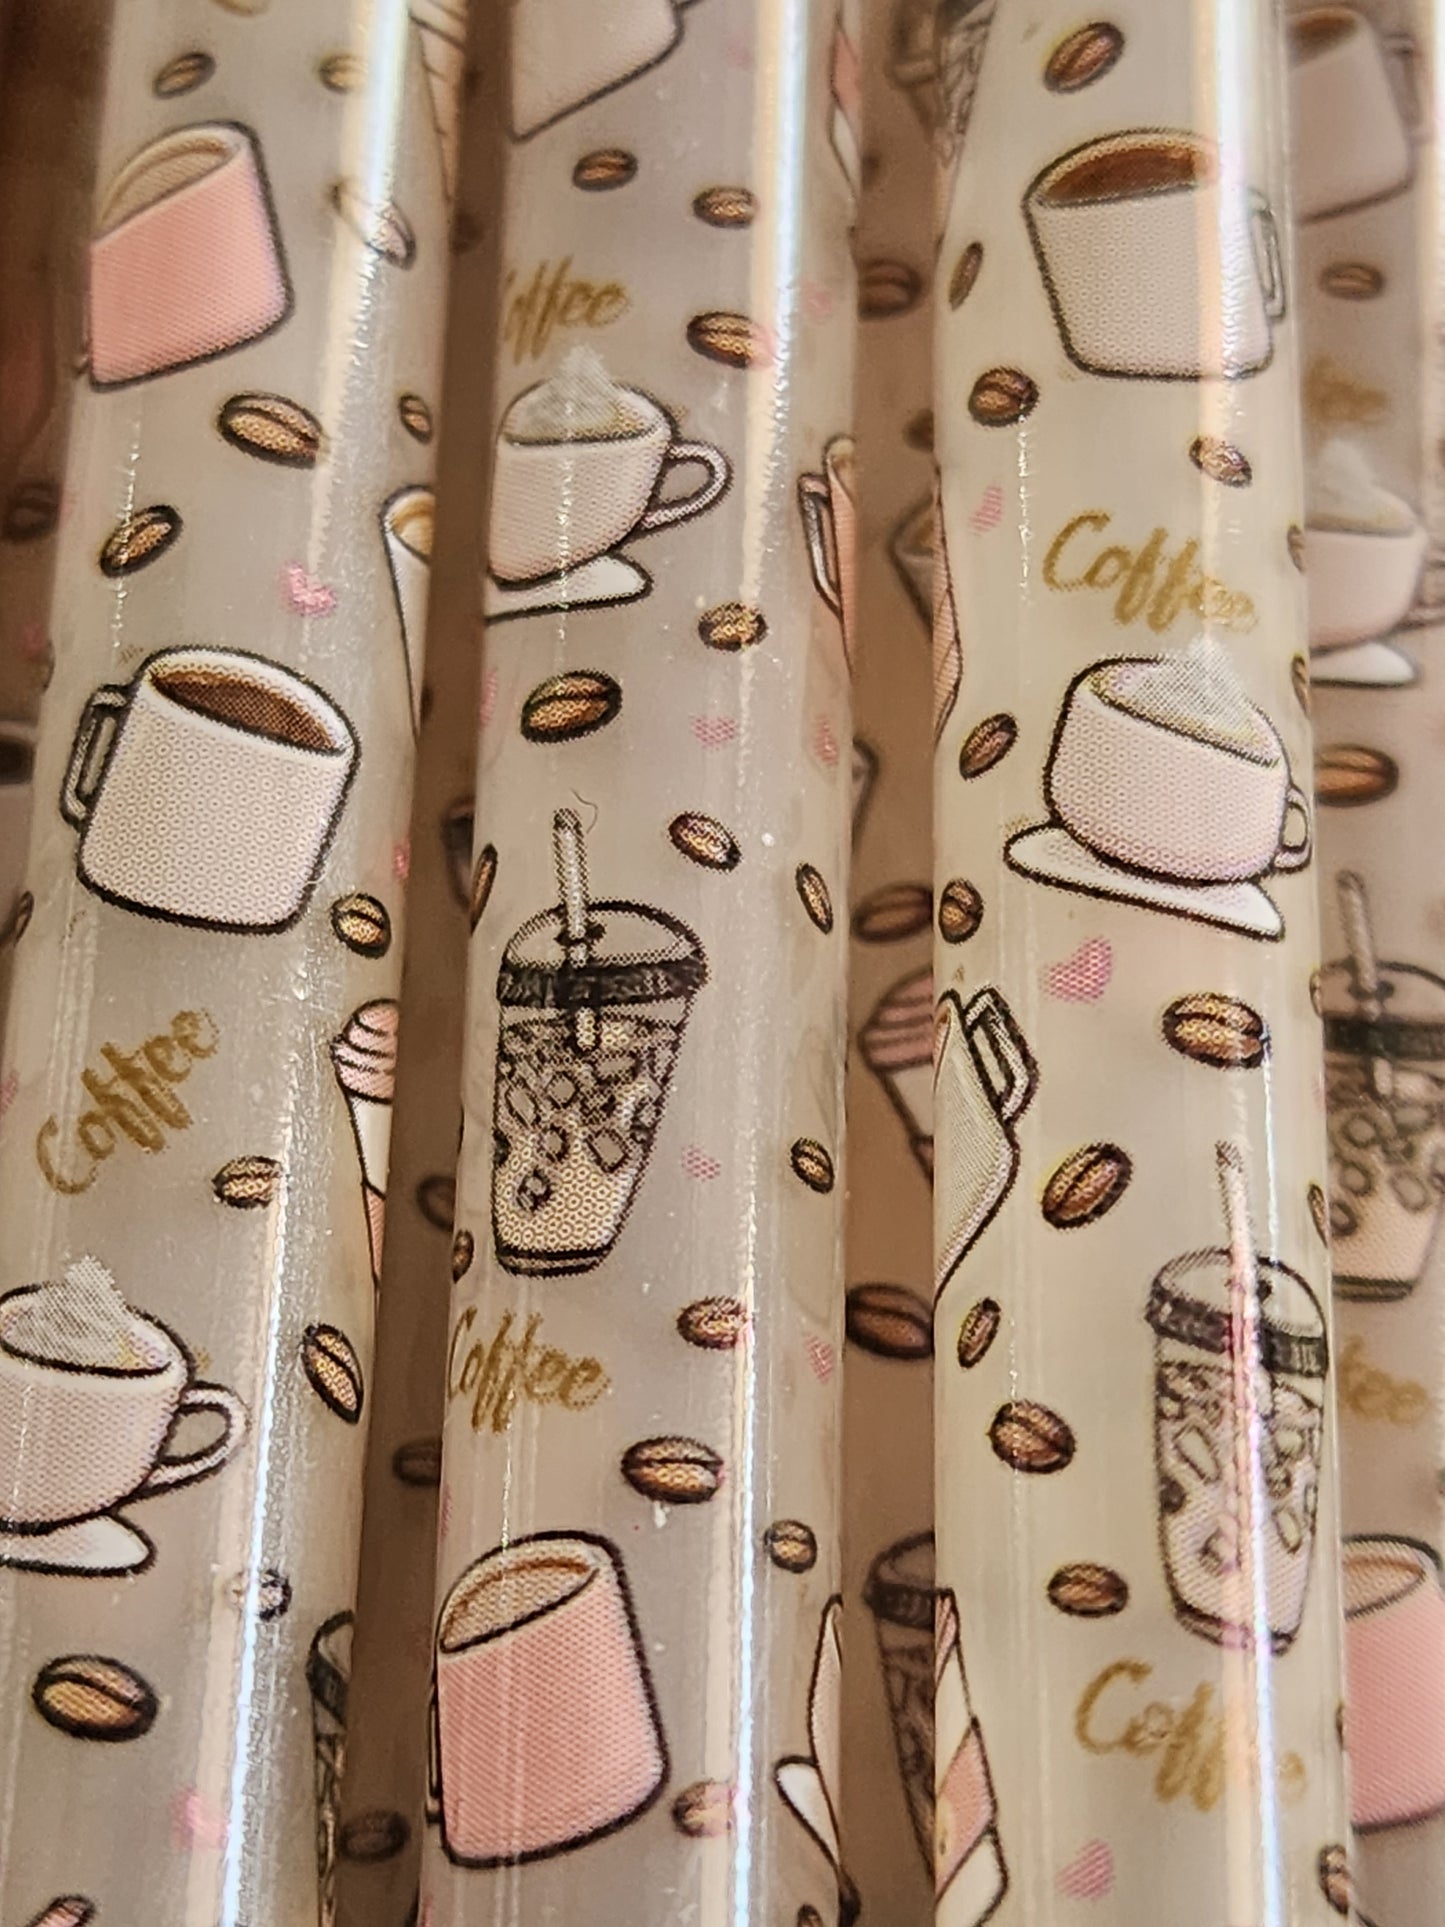 Coffee Straws